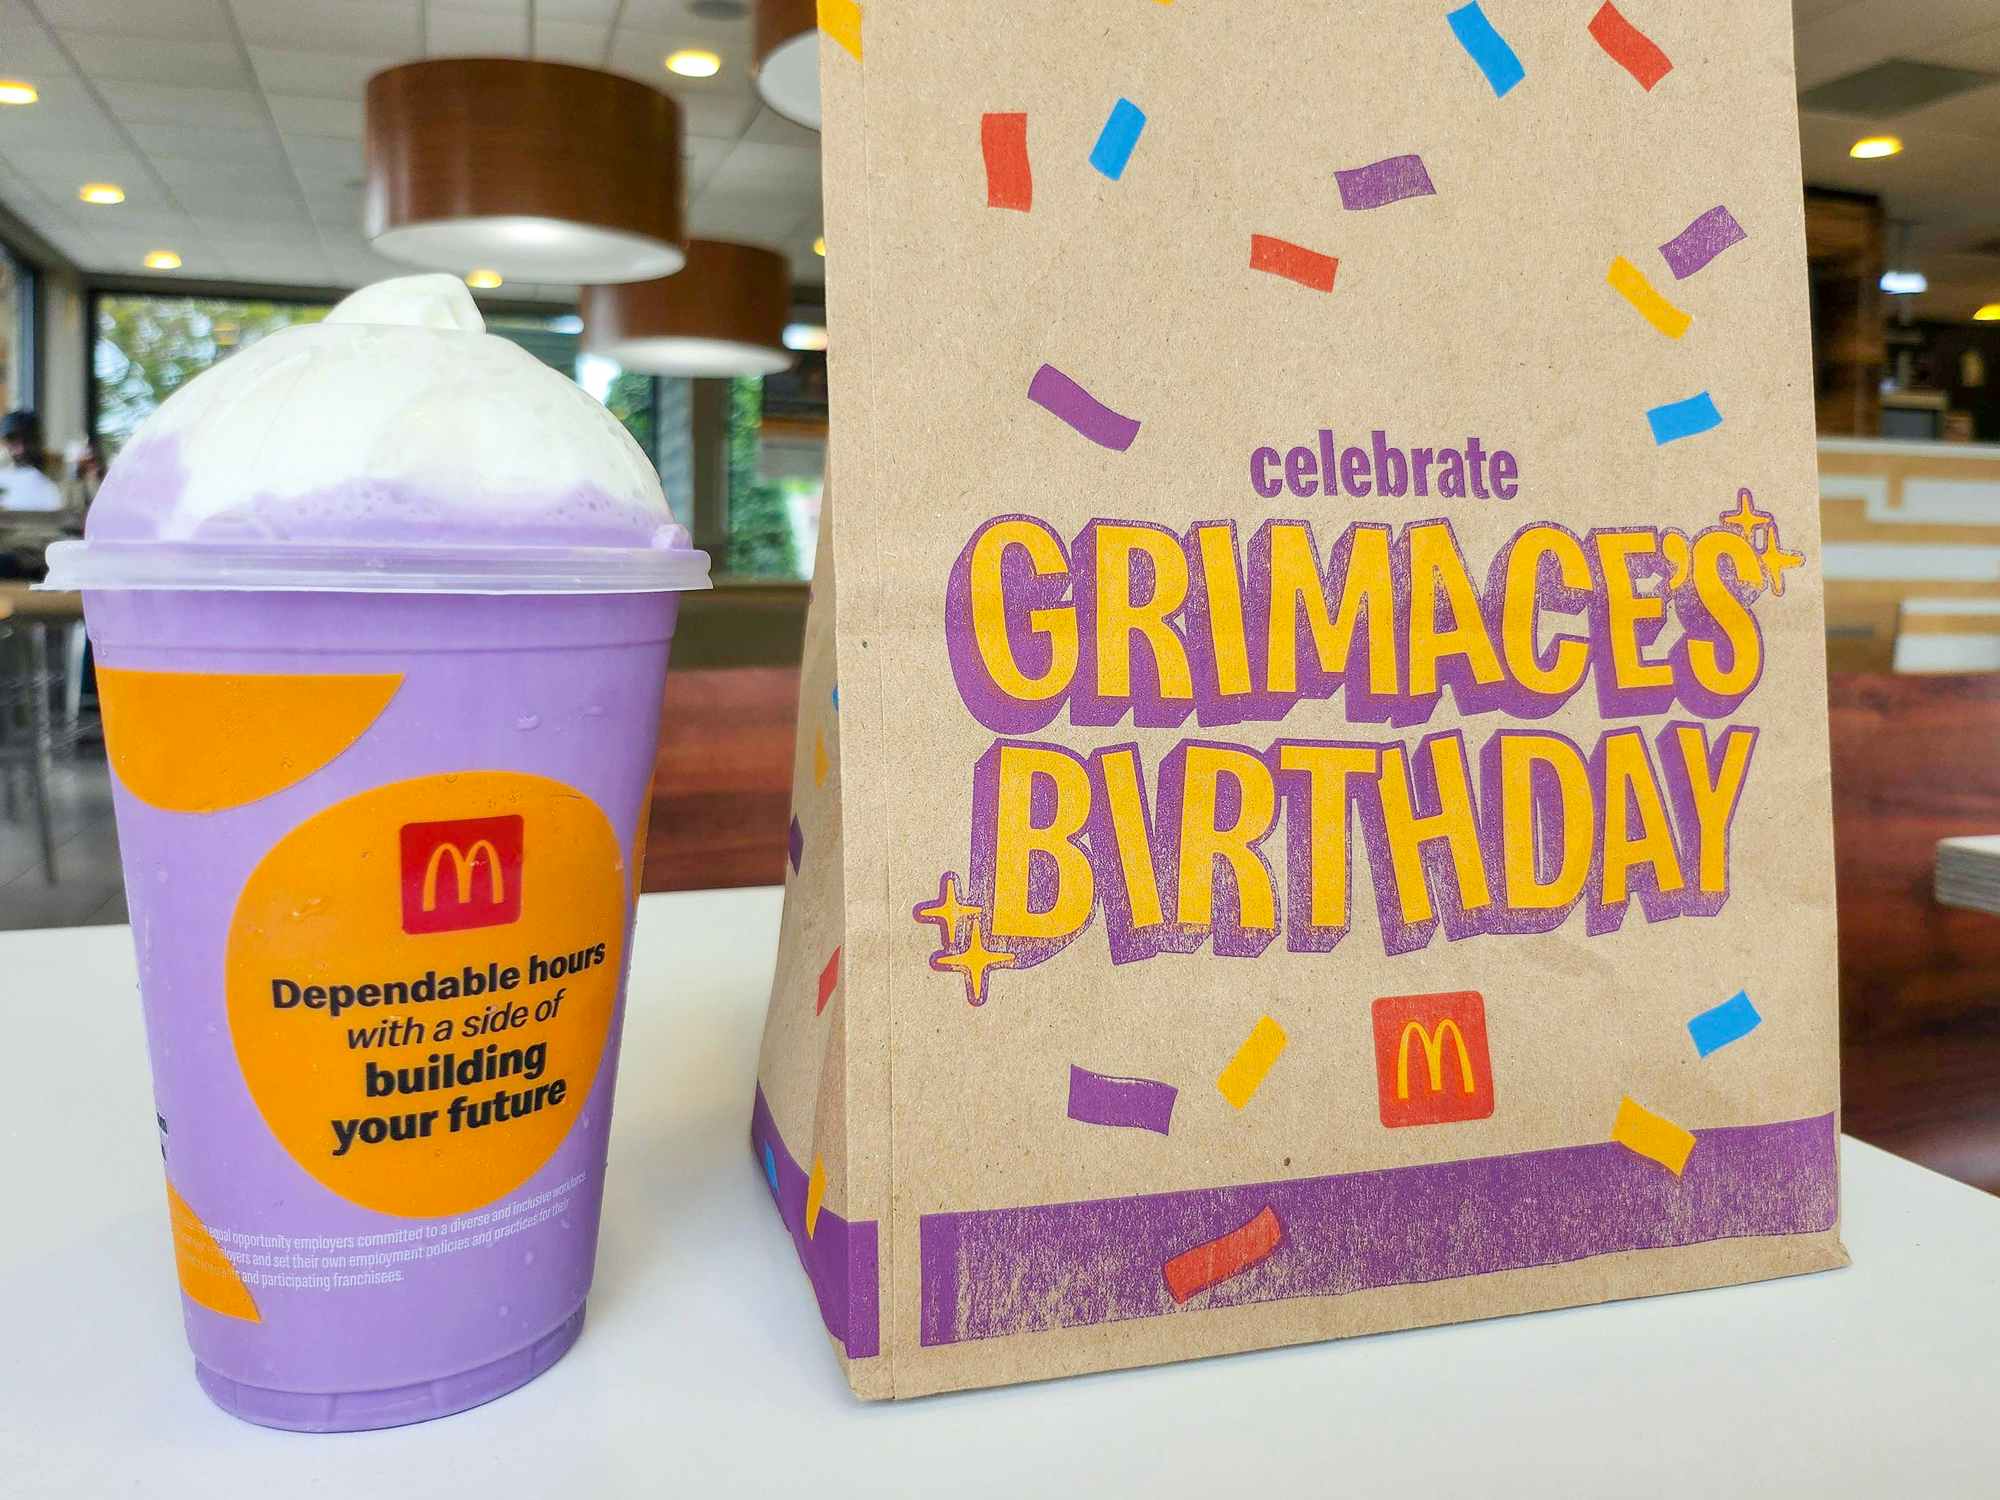 mcdonalds grimaces birthday meal bag and shake on table